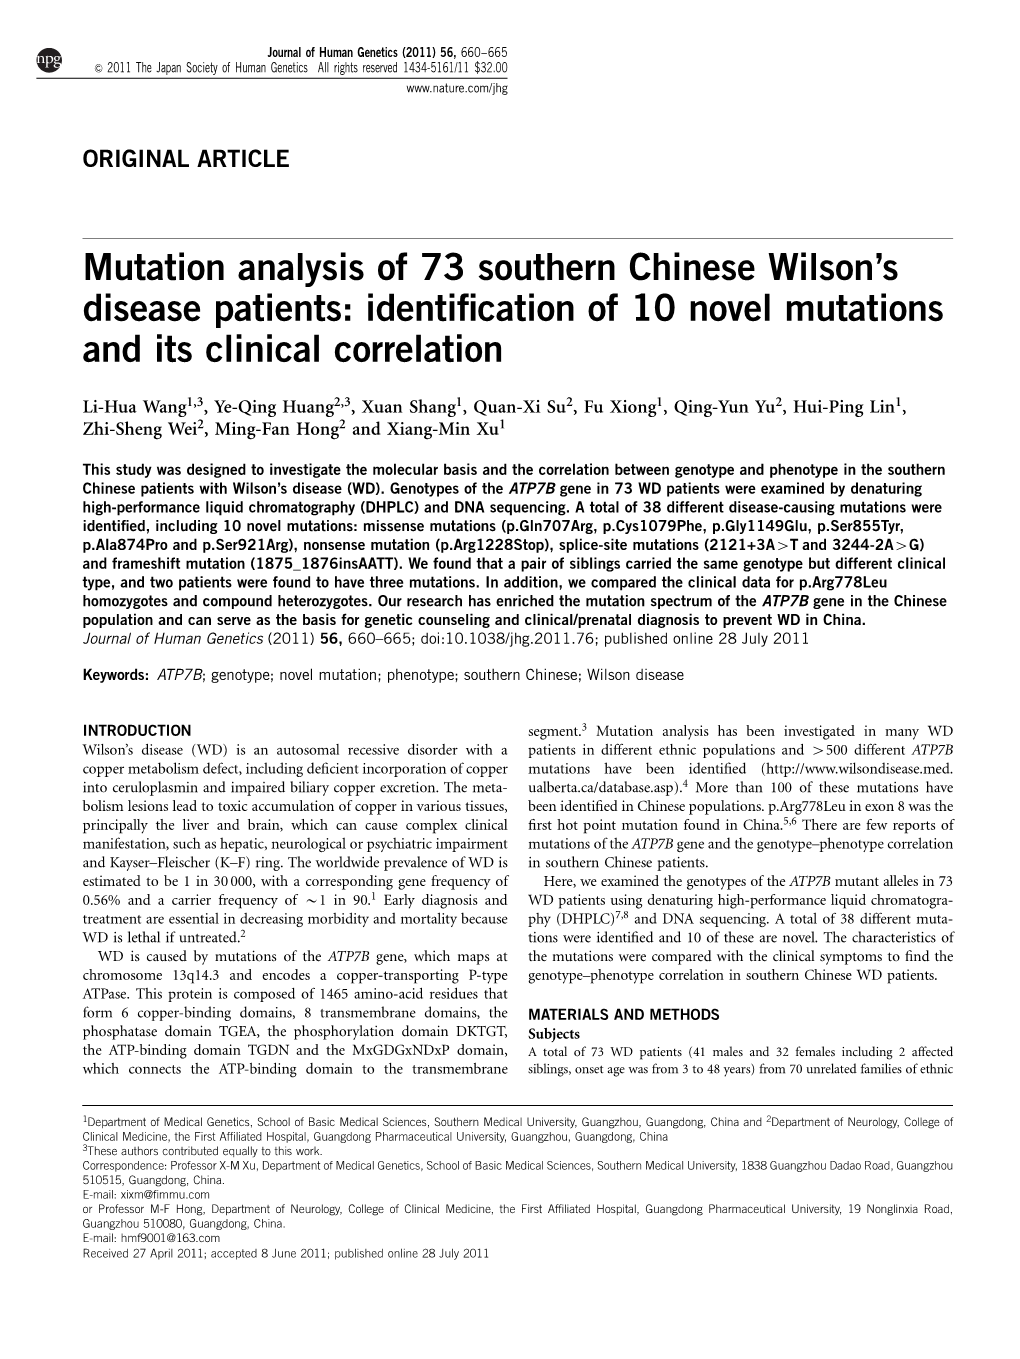 Mutation Analysis of 73 Southern Chinese Wilson&Apos;S